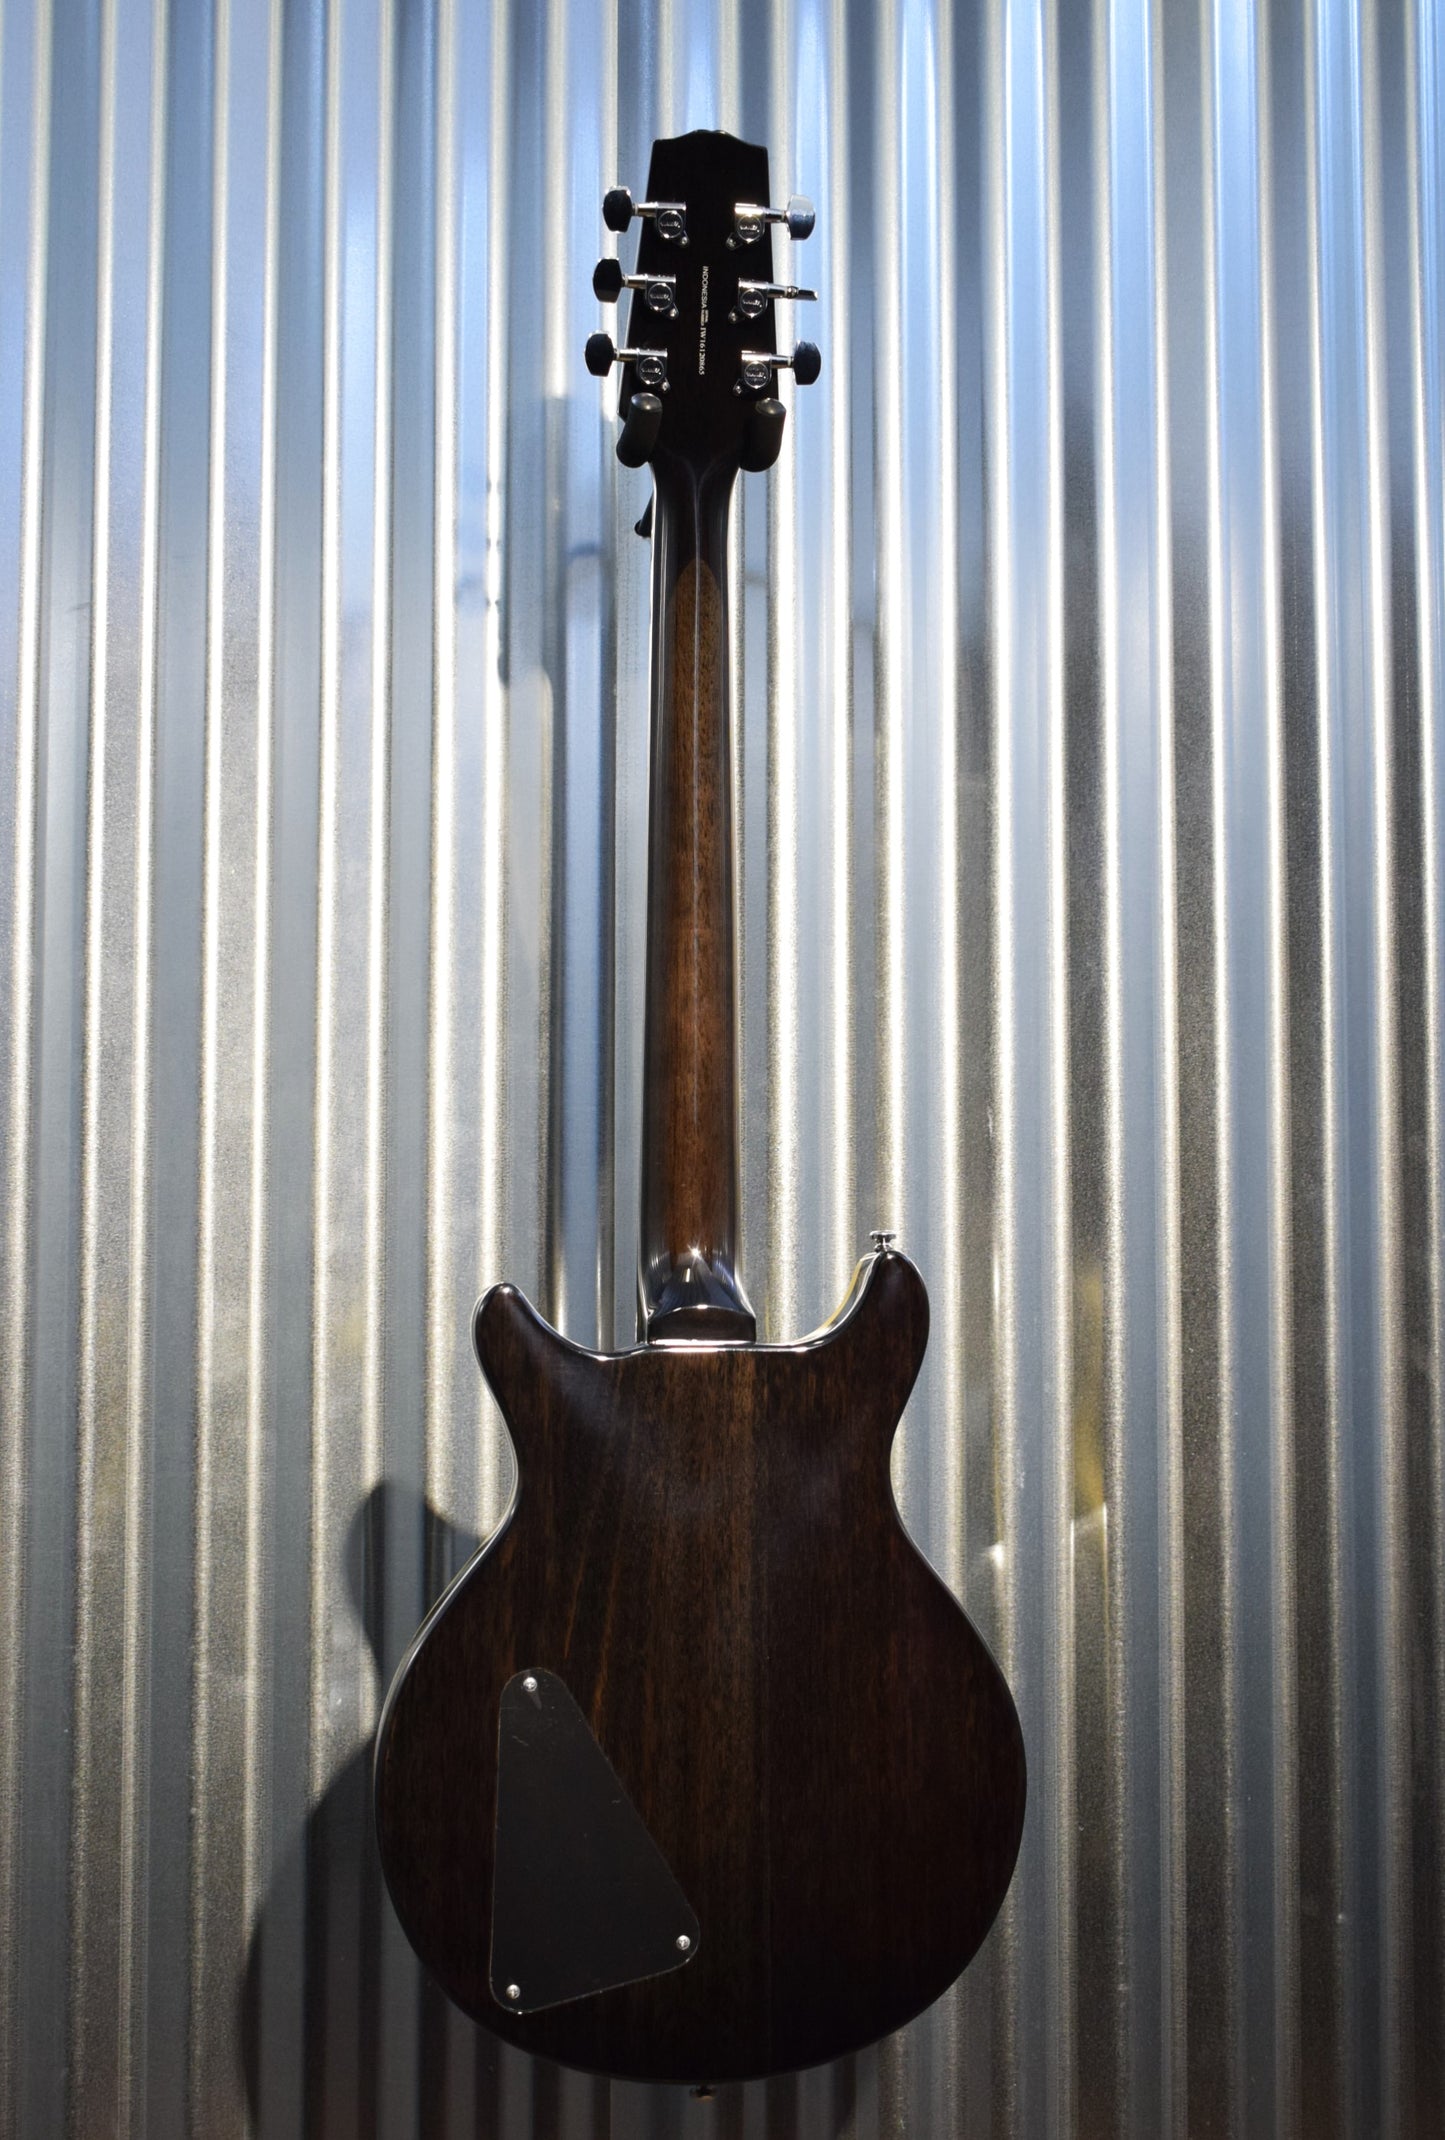 Hamer Archtop Flame Trans Black Double Cut Electric Guitar SATF-TBK #0865